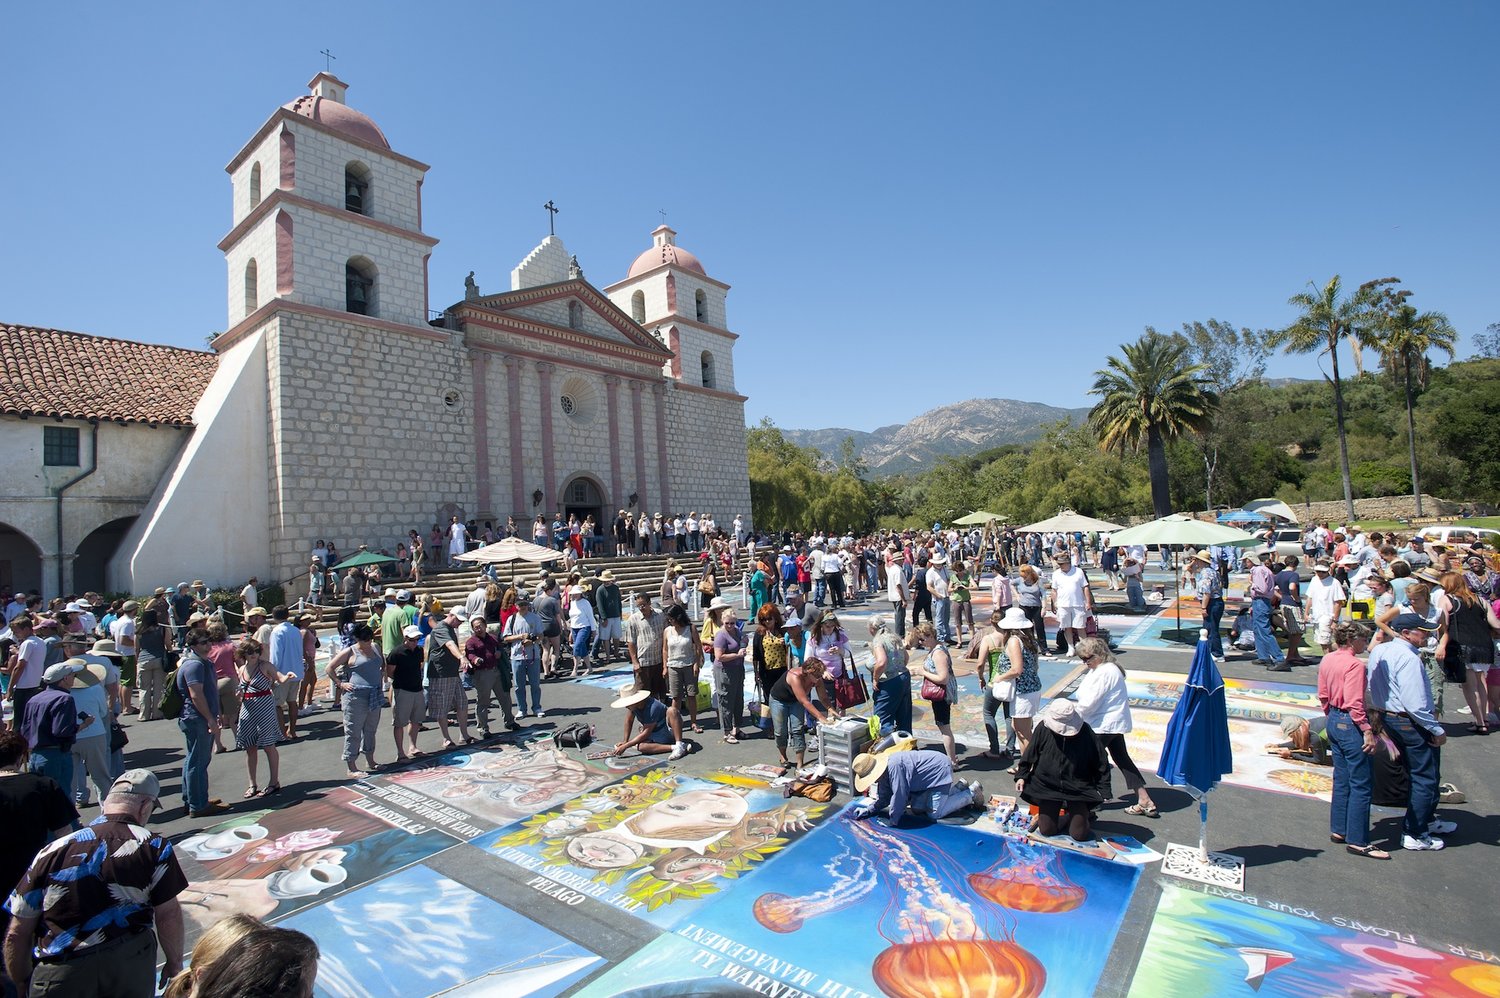 Annual I Modonnari Street Painting Festival at Santa Barbara Mission